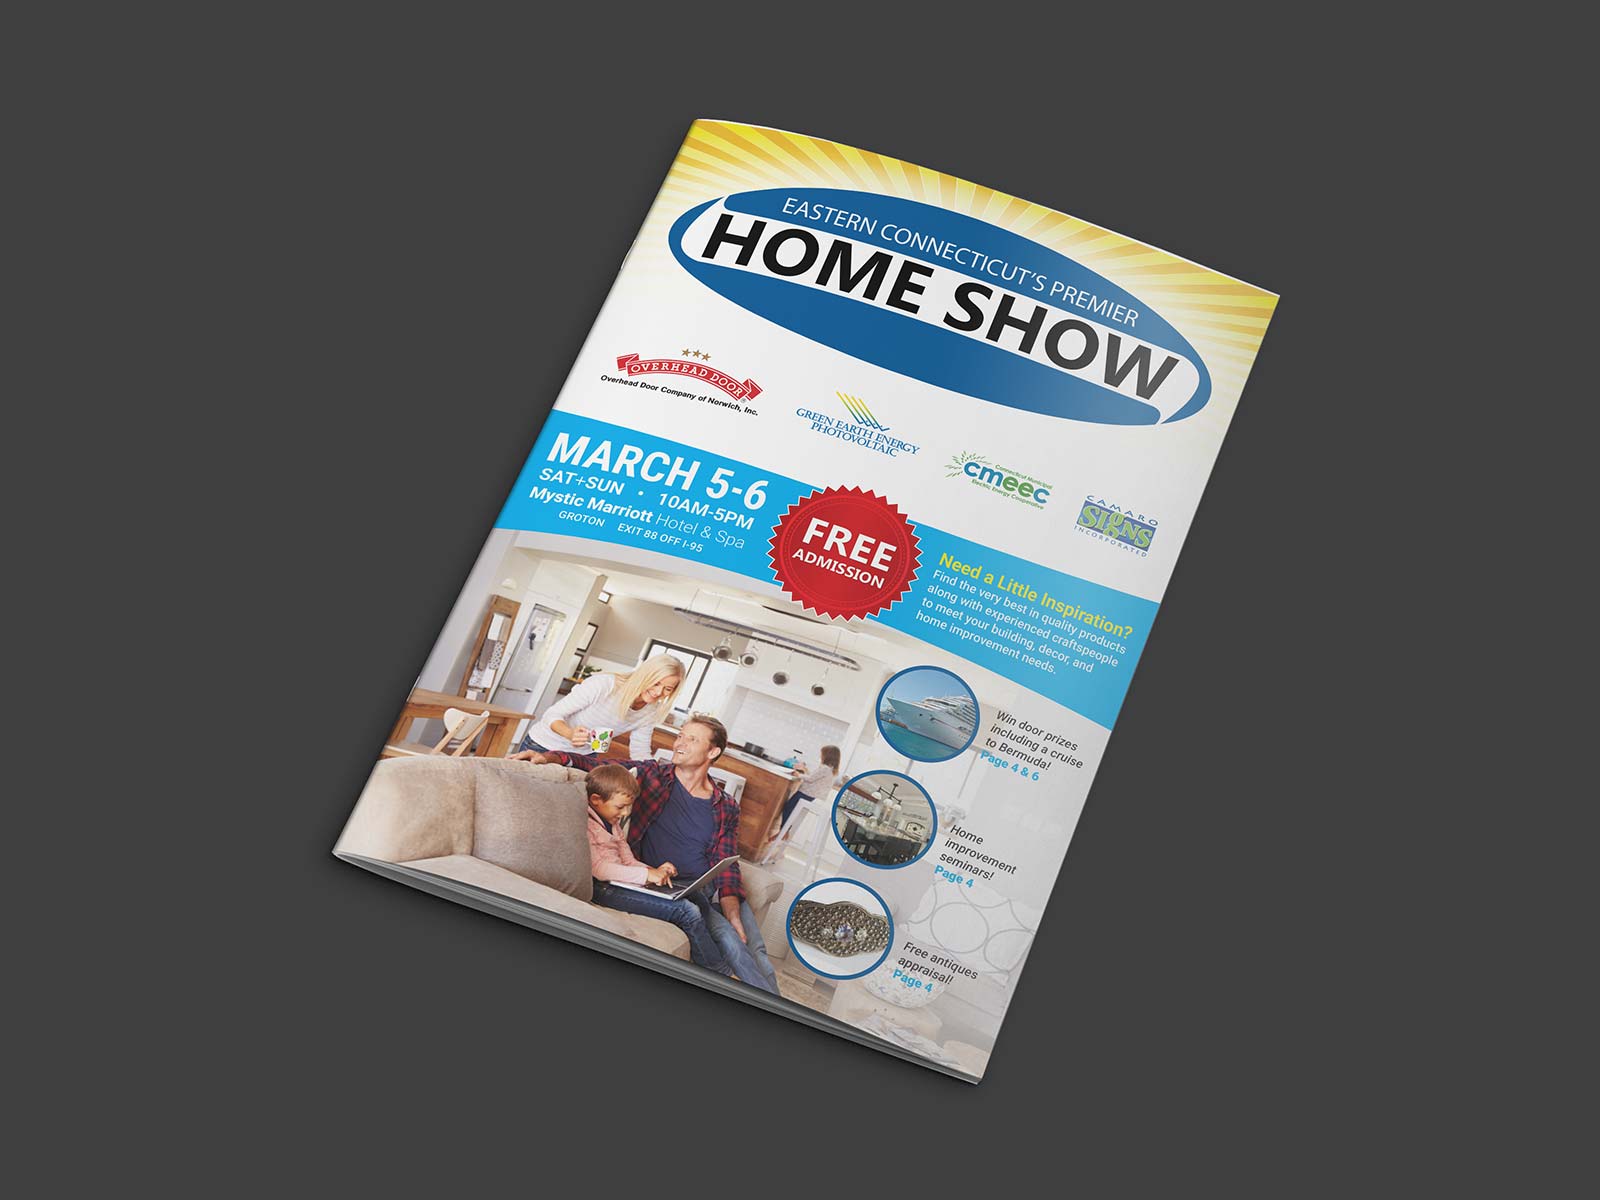 Home Show program booklet cover